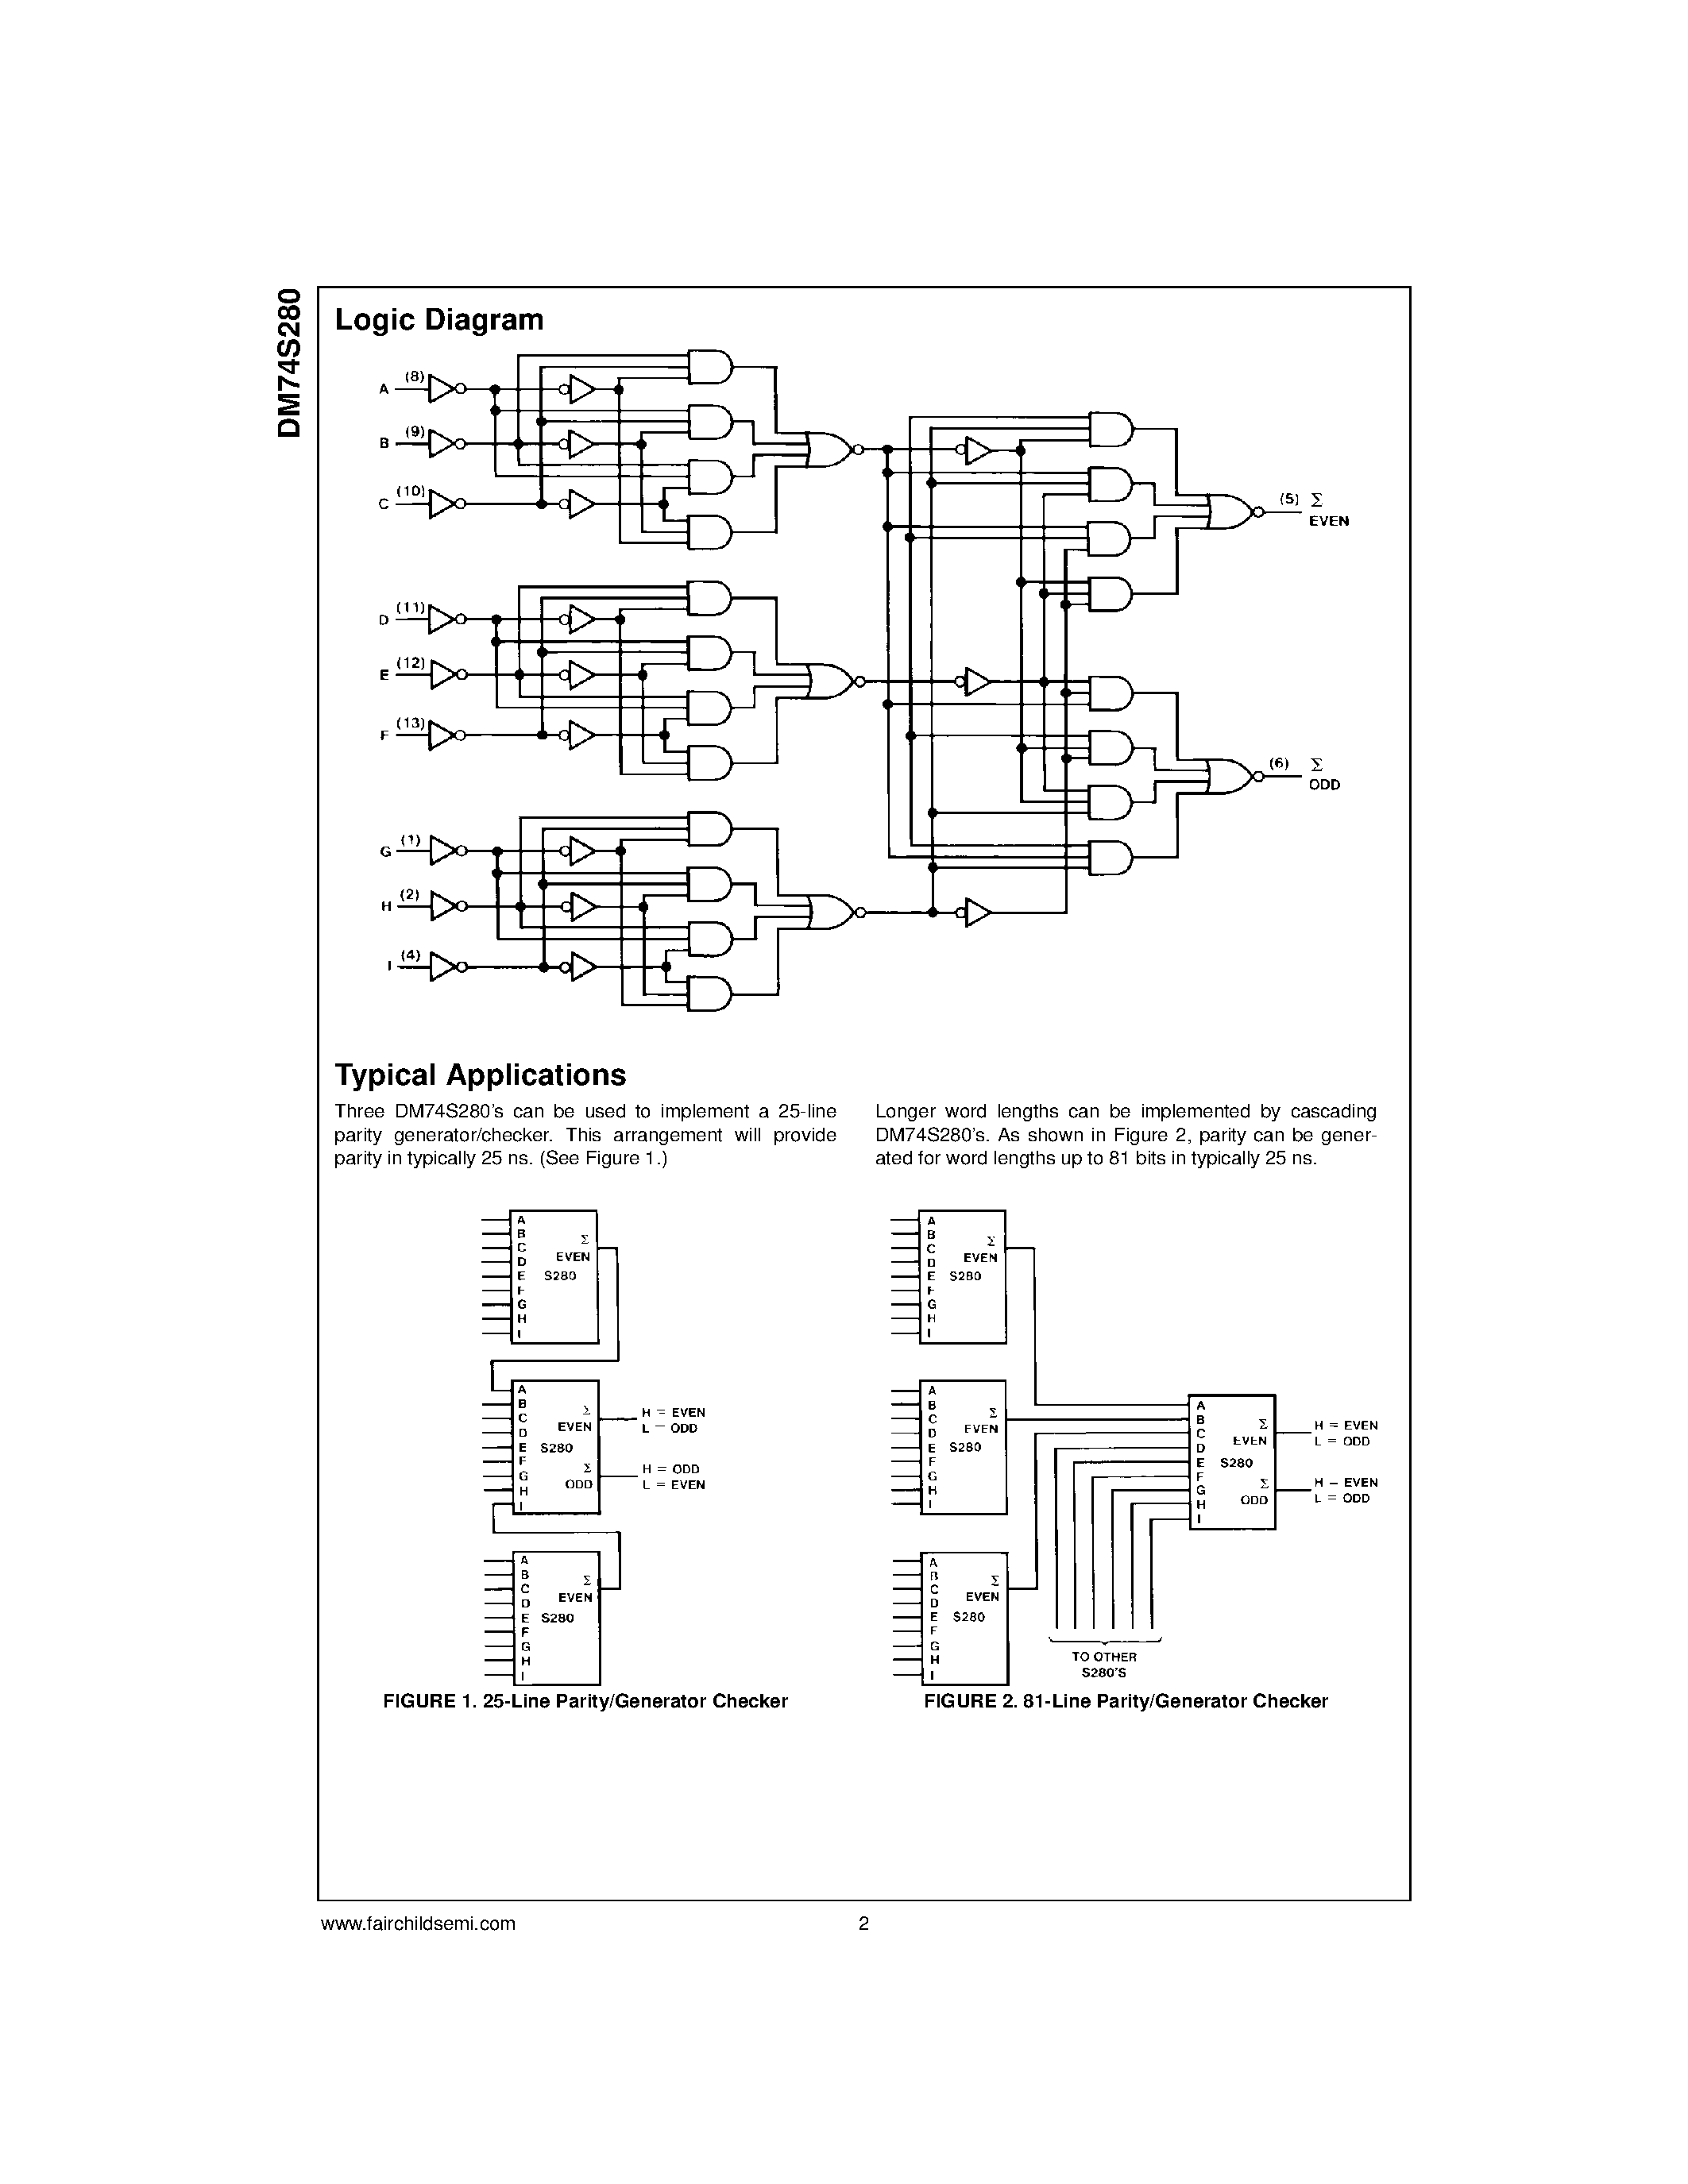 Datasheet DM74S280 - 9-Bit Parity Generator/Checker page 2